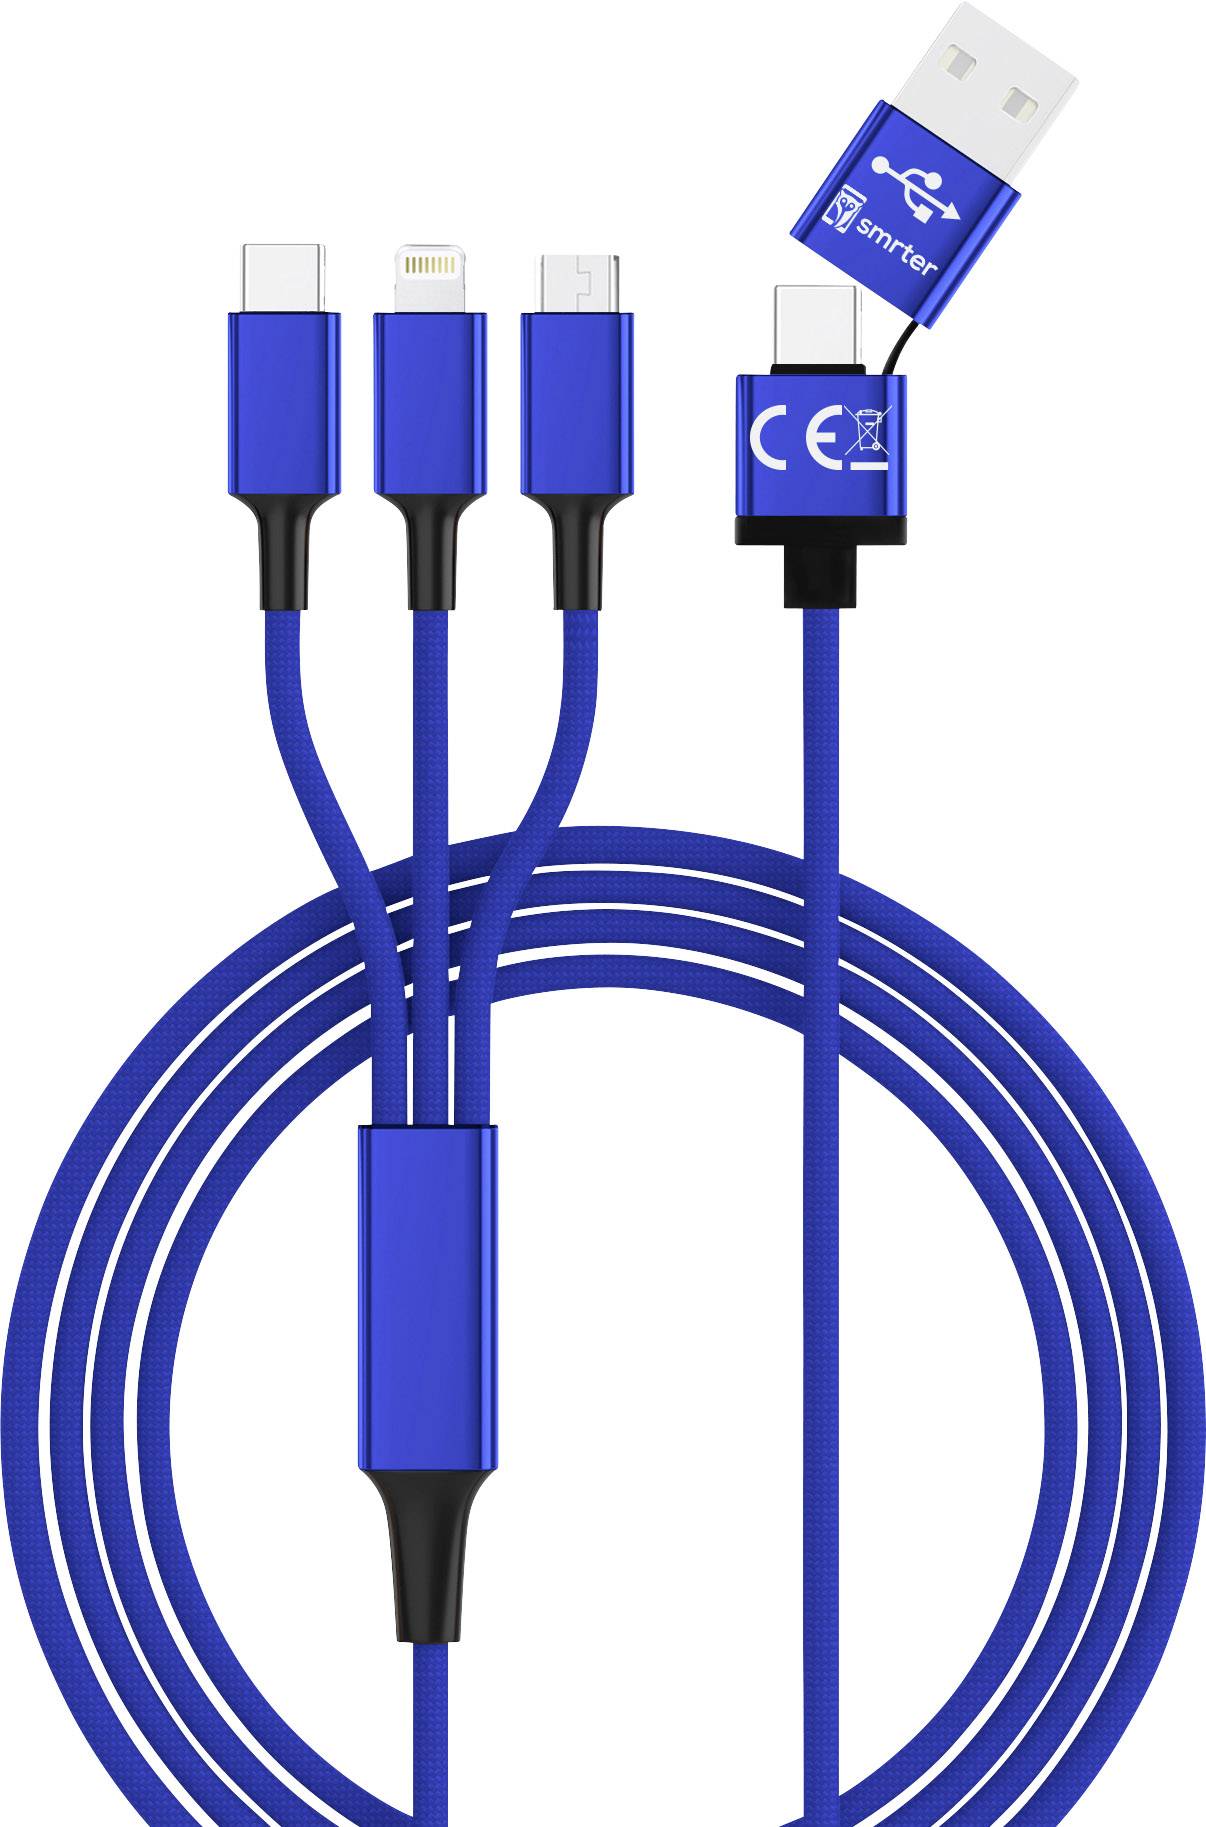 NONAME smrter Hydra ULTRA 5-in-1 USB-Ladekabel (1,2 m), navyblue